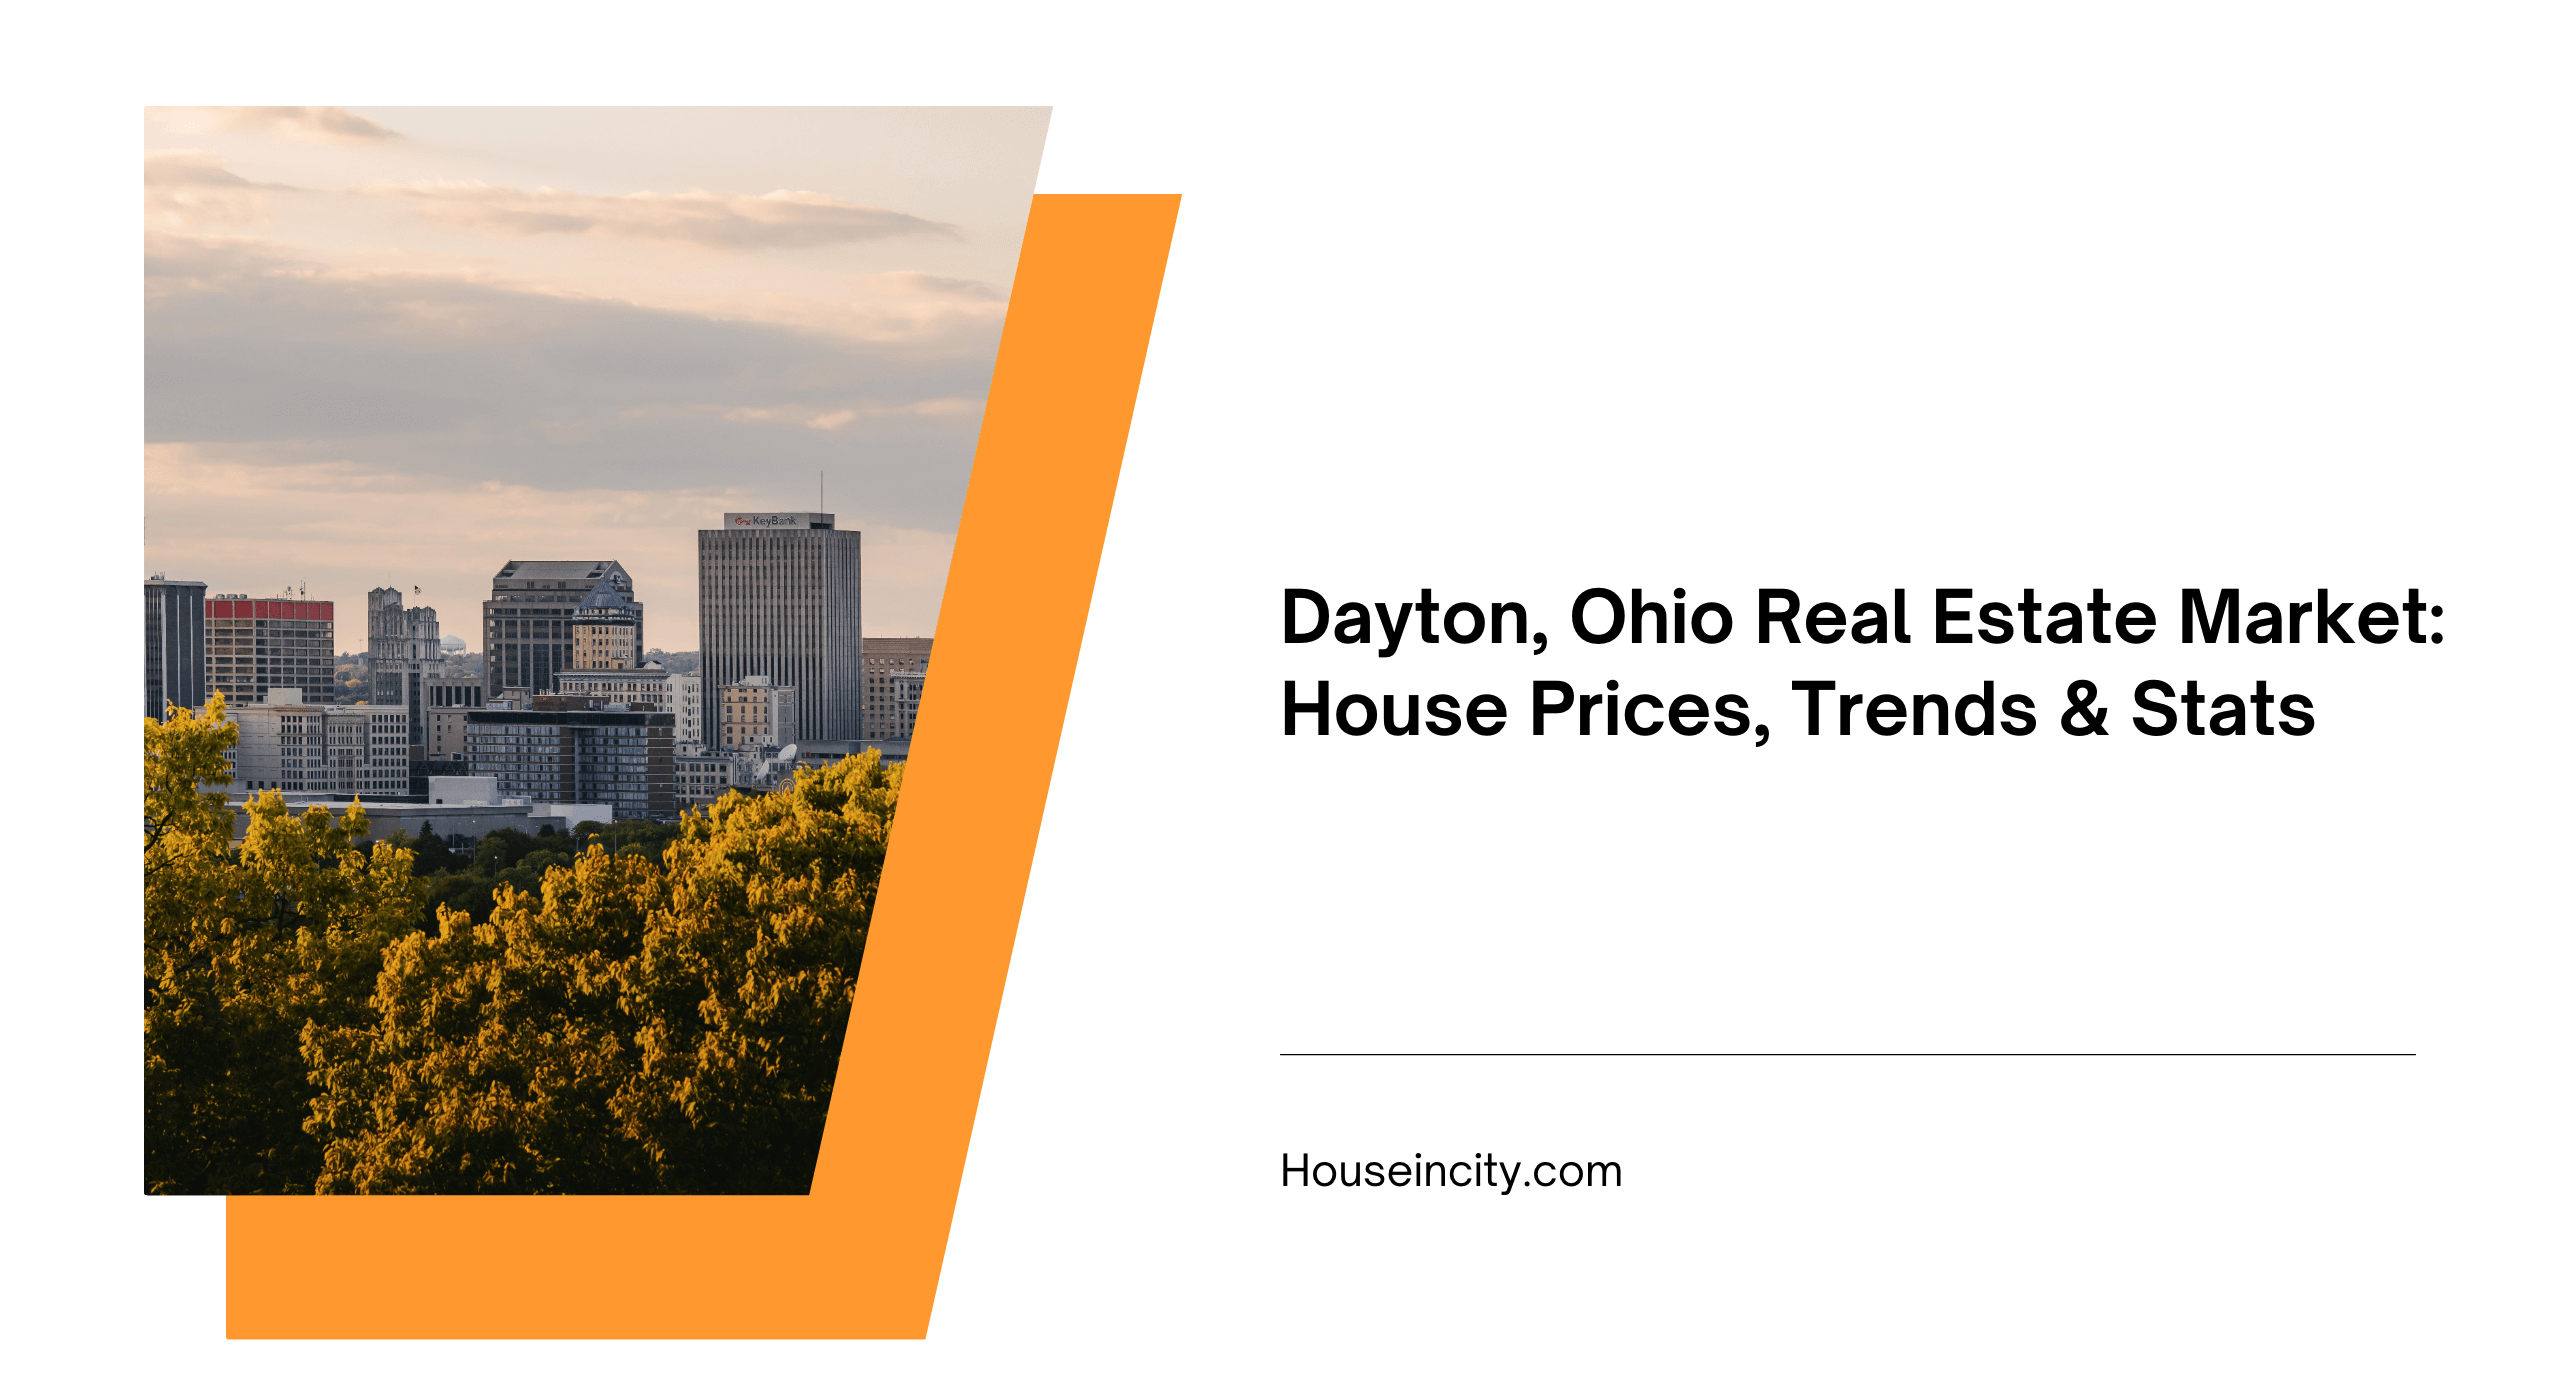 Dayton, Ohio Real Estate Market: House Prices, Trends & Stats